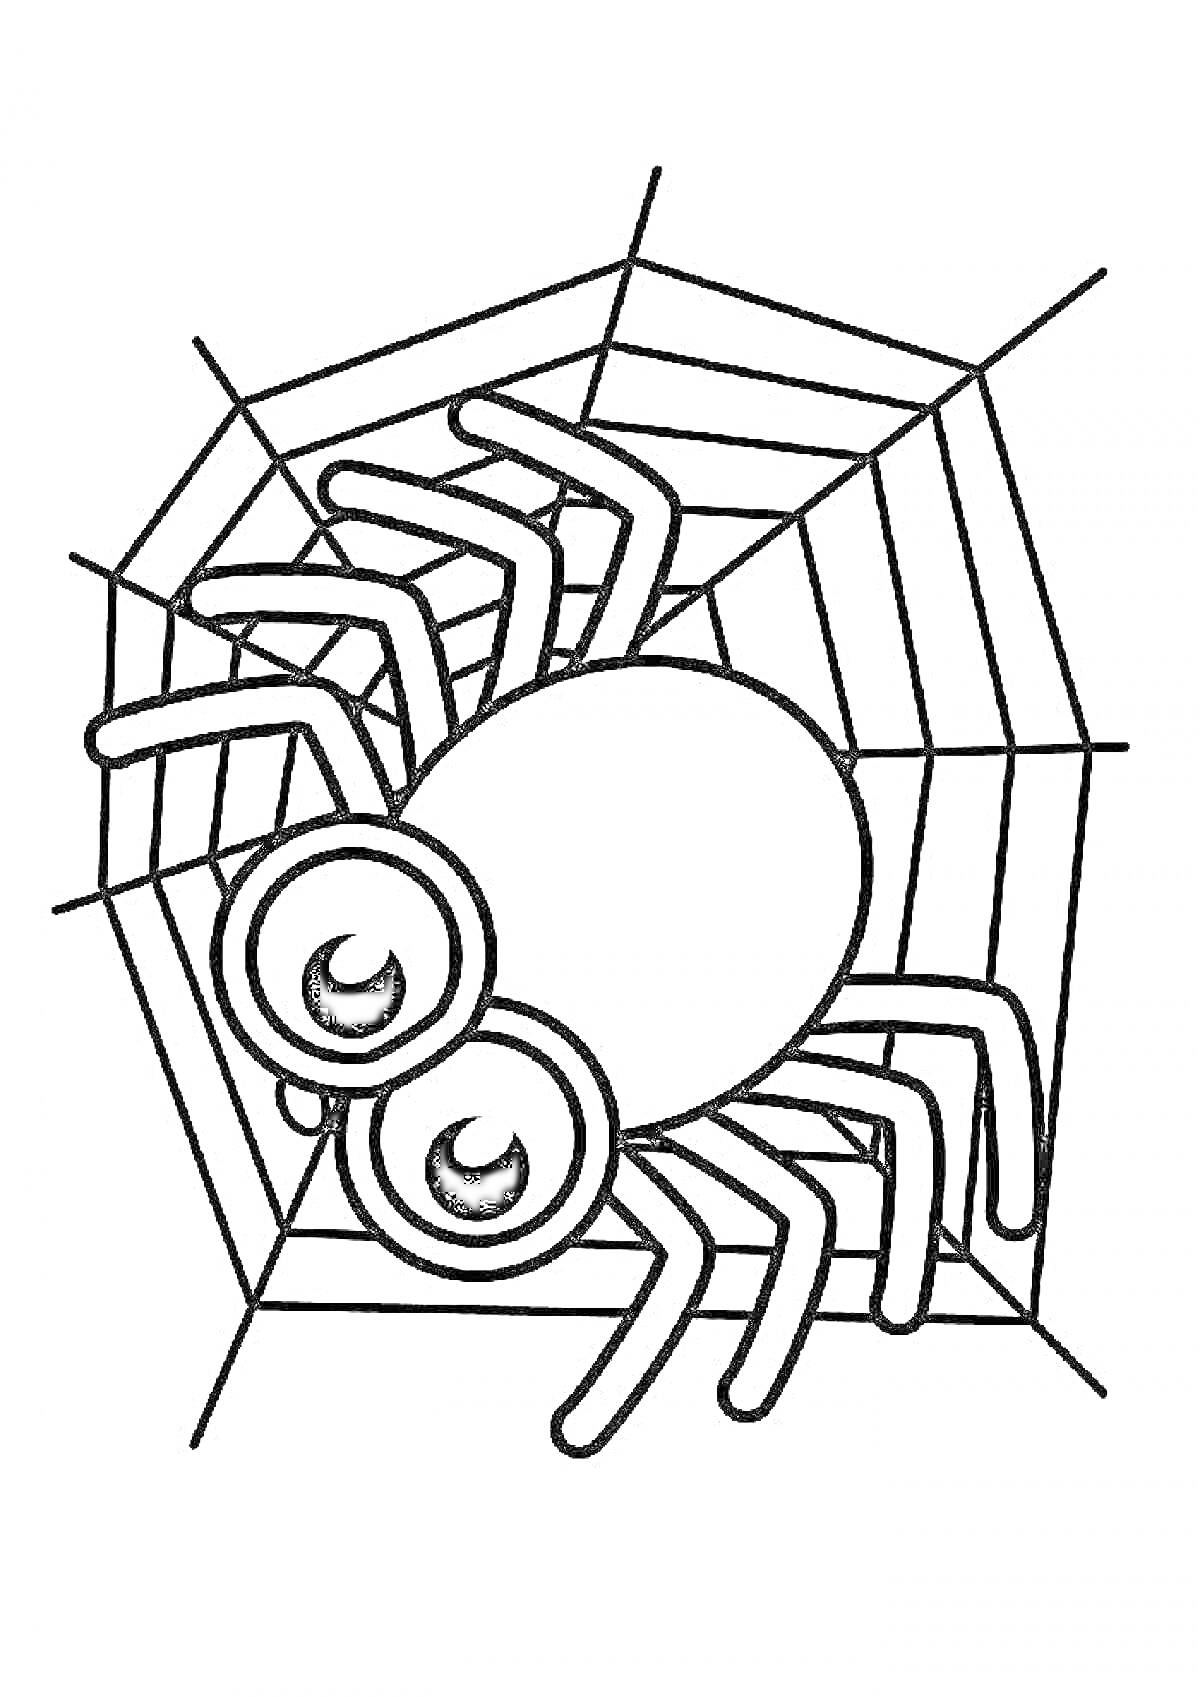 Паук на паутине с большими глазами